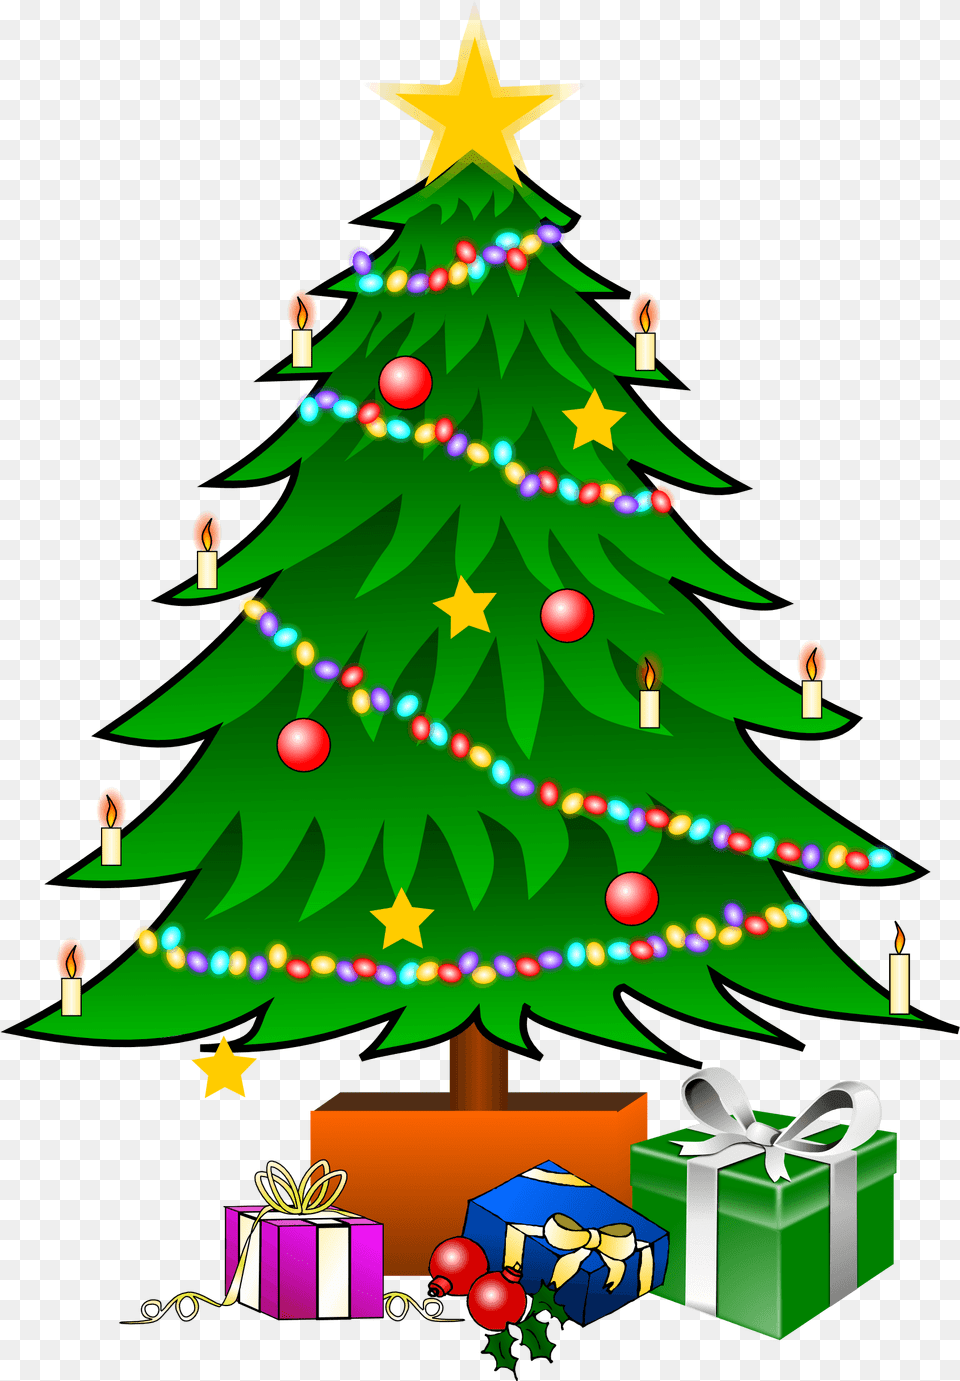 Christmas Vector Image Christmas Tree Vector, Christmas Decorations, Festival, Plant, Christmas Tree Free Transparent Png